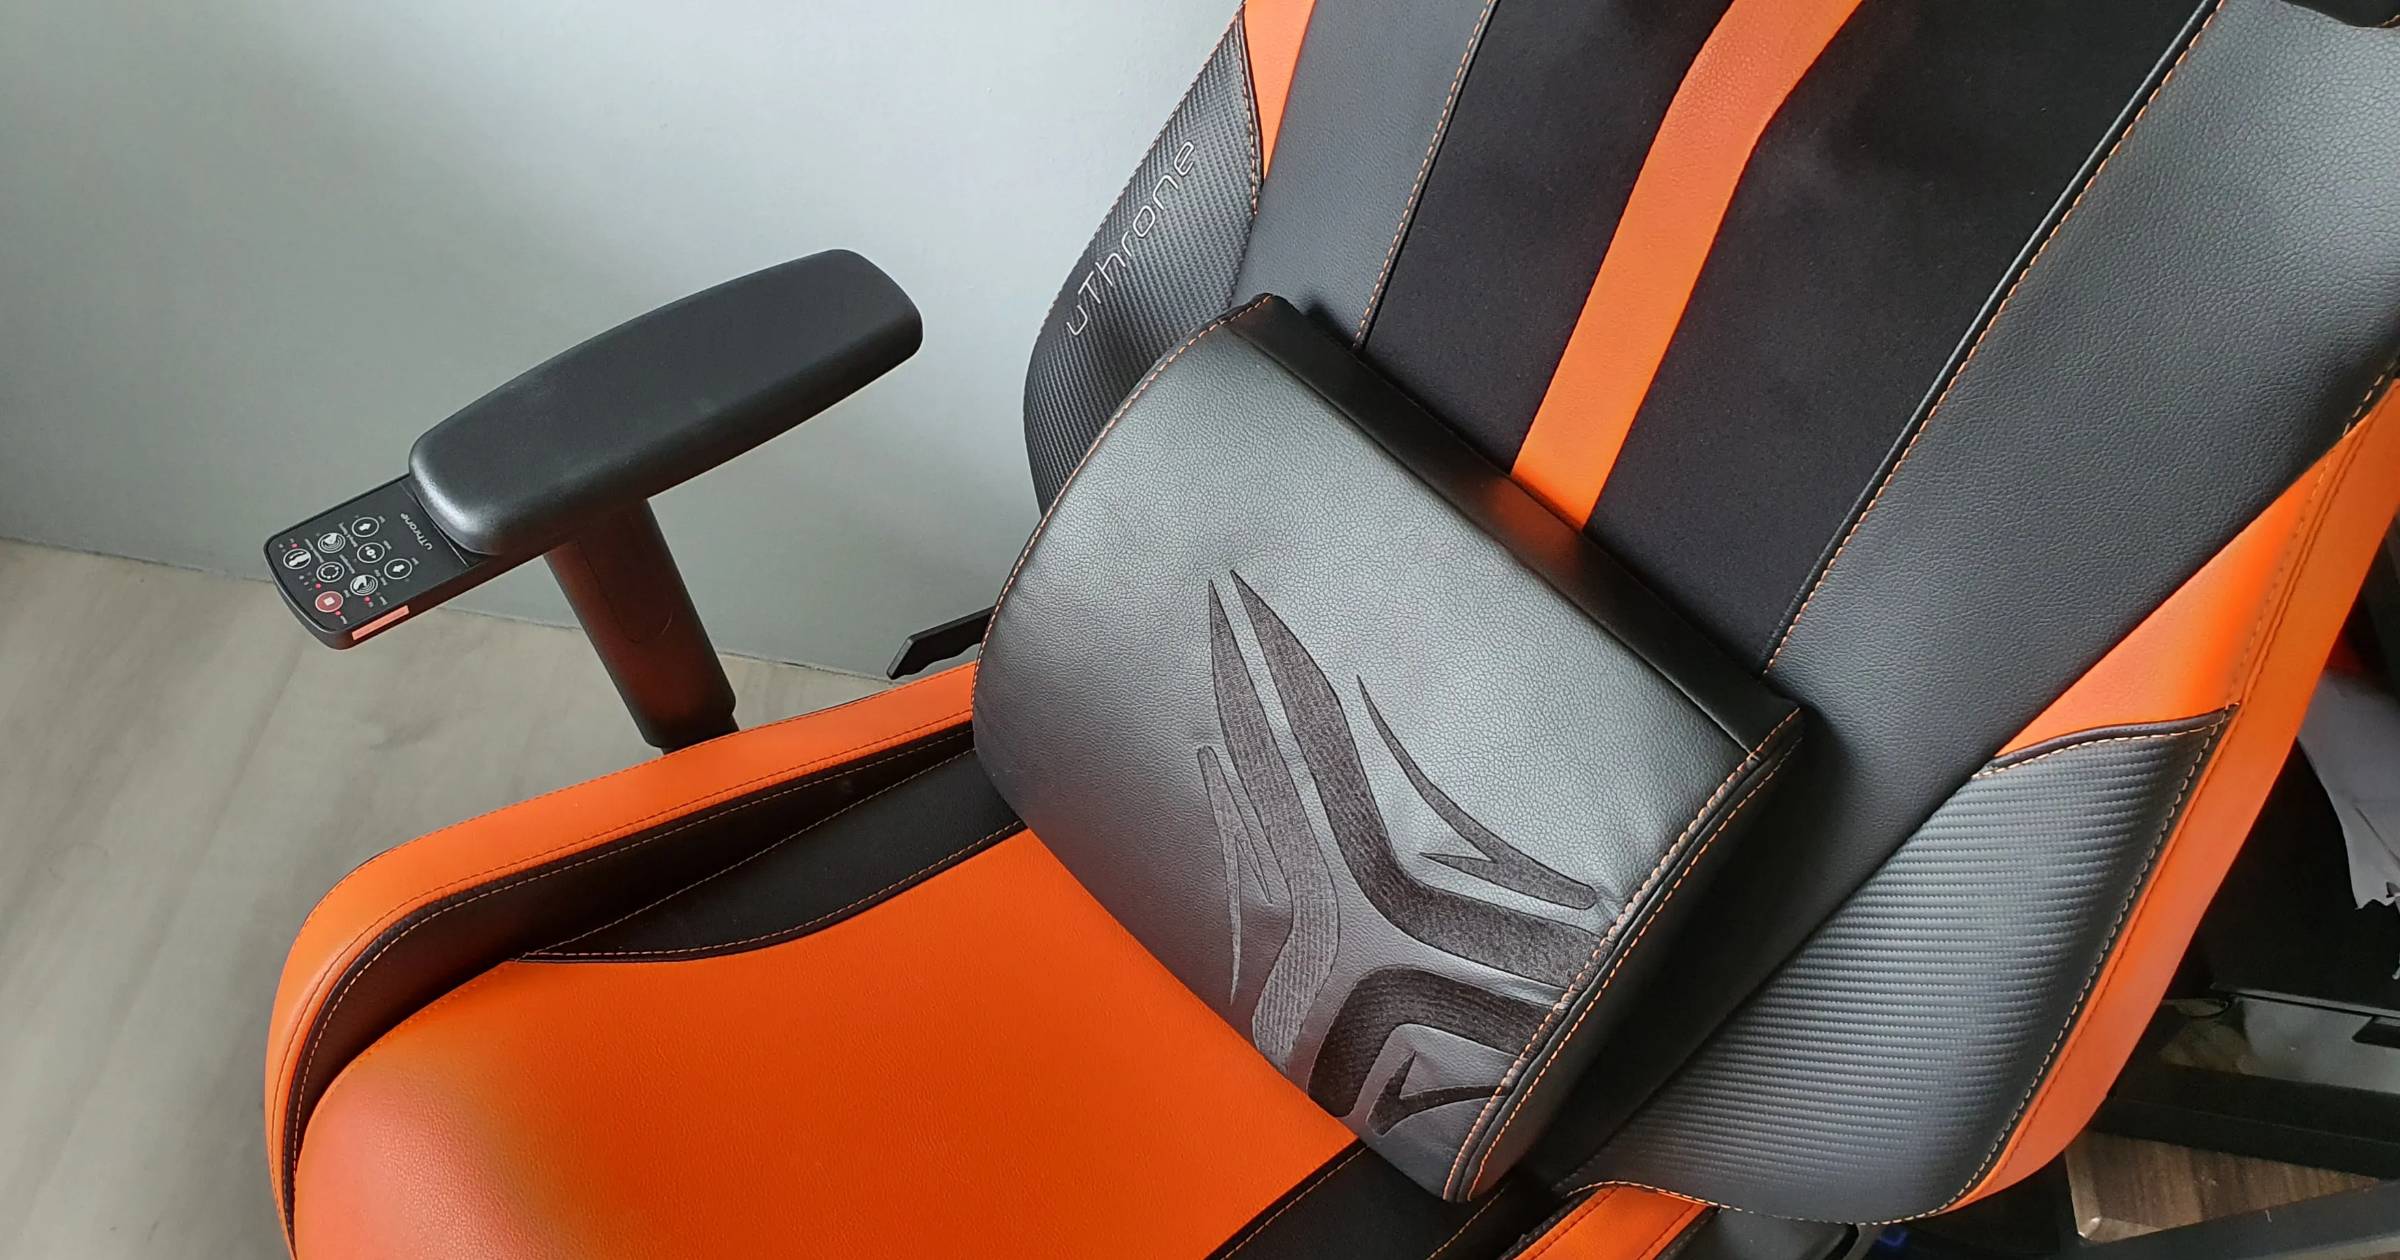 OSIM uThrone Gaming Chair (Orange & Black)